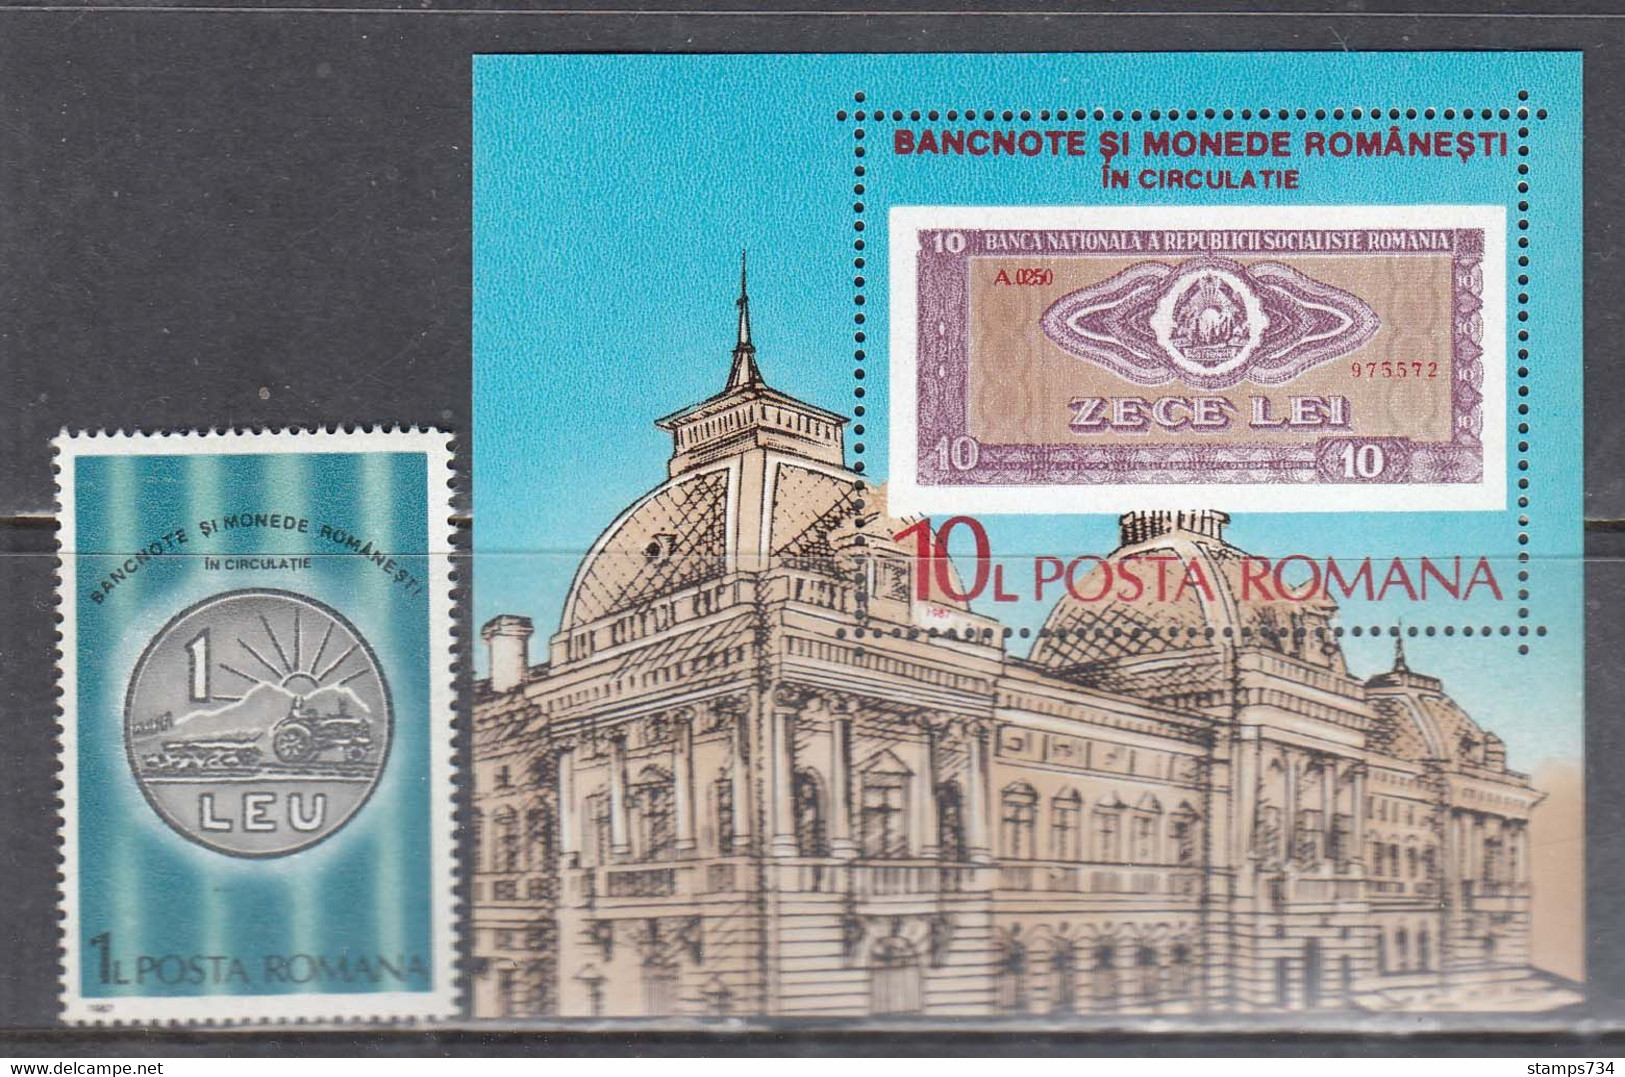 Romania 1987 - Circulating Romanian Banknotes And Coins, Mi-Nr. 4339+Bl. 233, MNH** - Ongebruikt